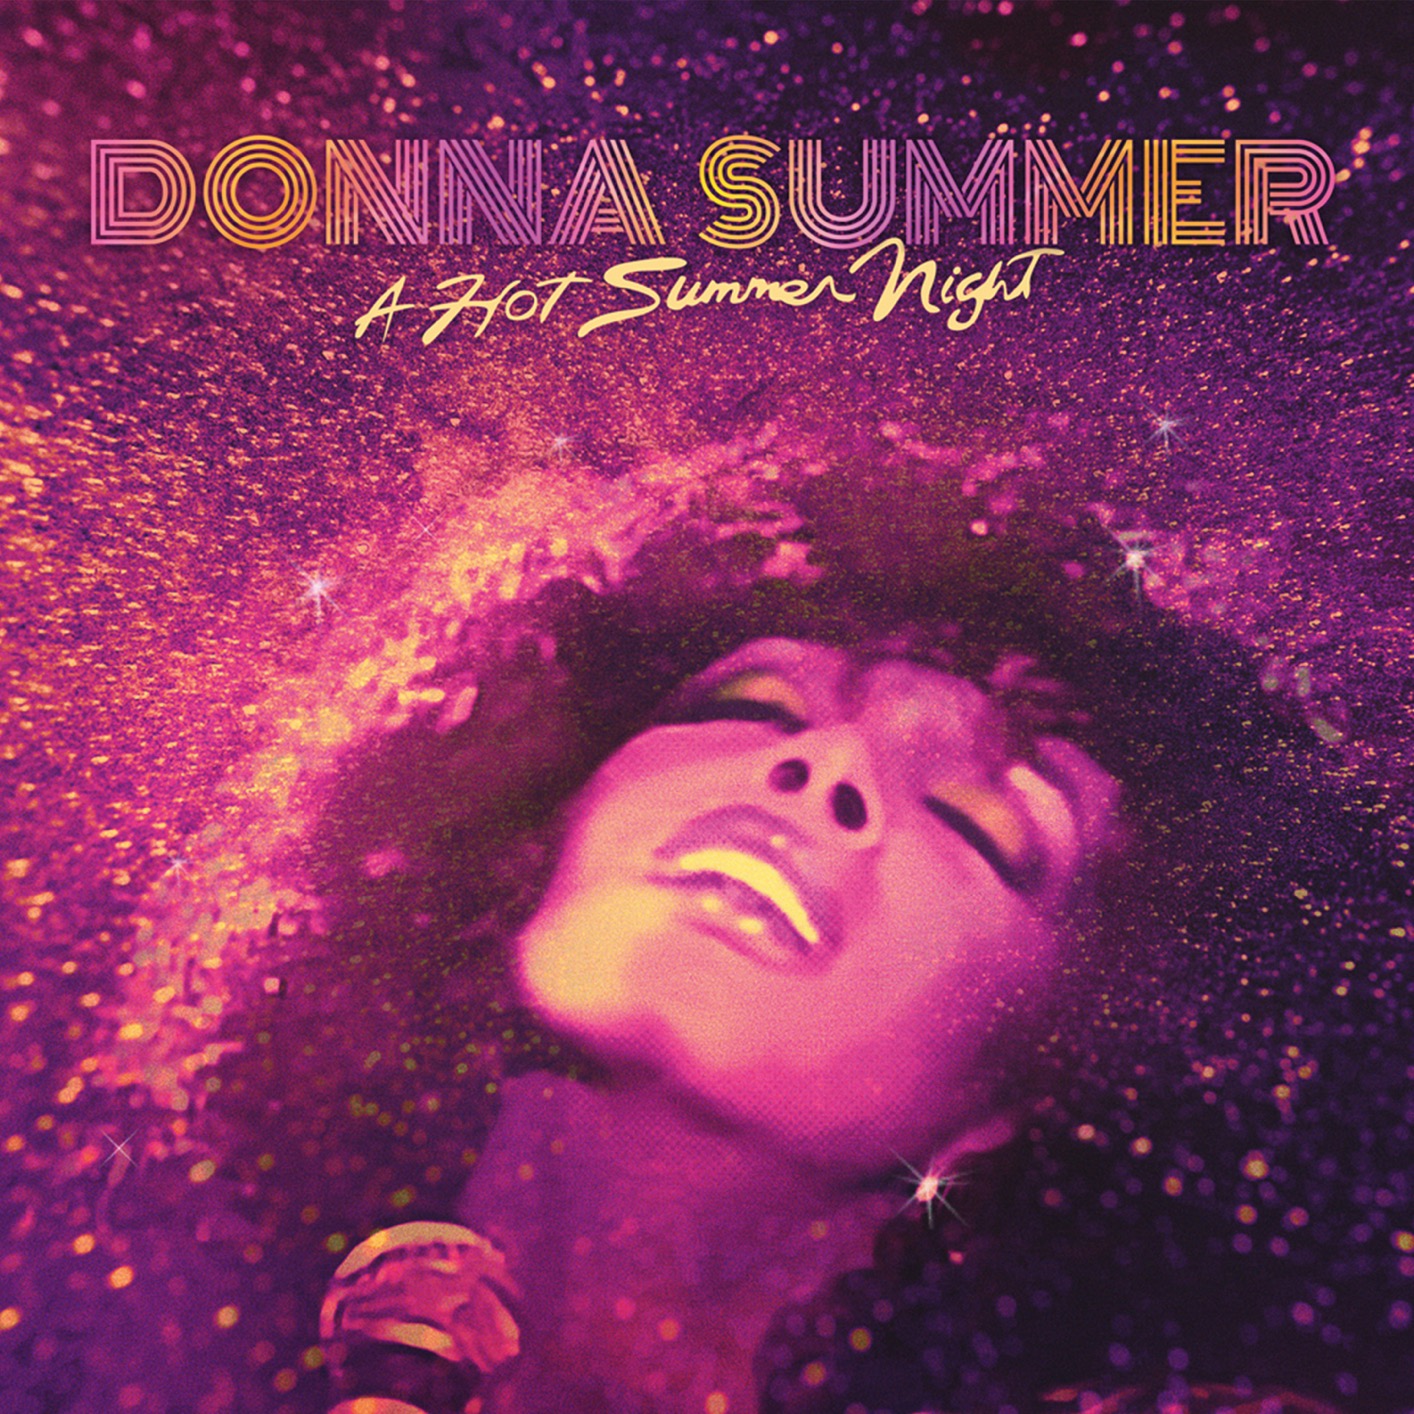 Donna Summer – A Hot Summer Night (Live at Pacific Amphitheatre 06.08.1983) (1983/2020) [FLAC 24bit/44,1kHz]